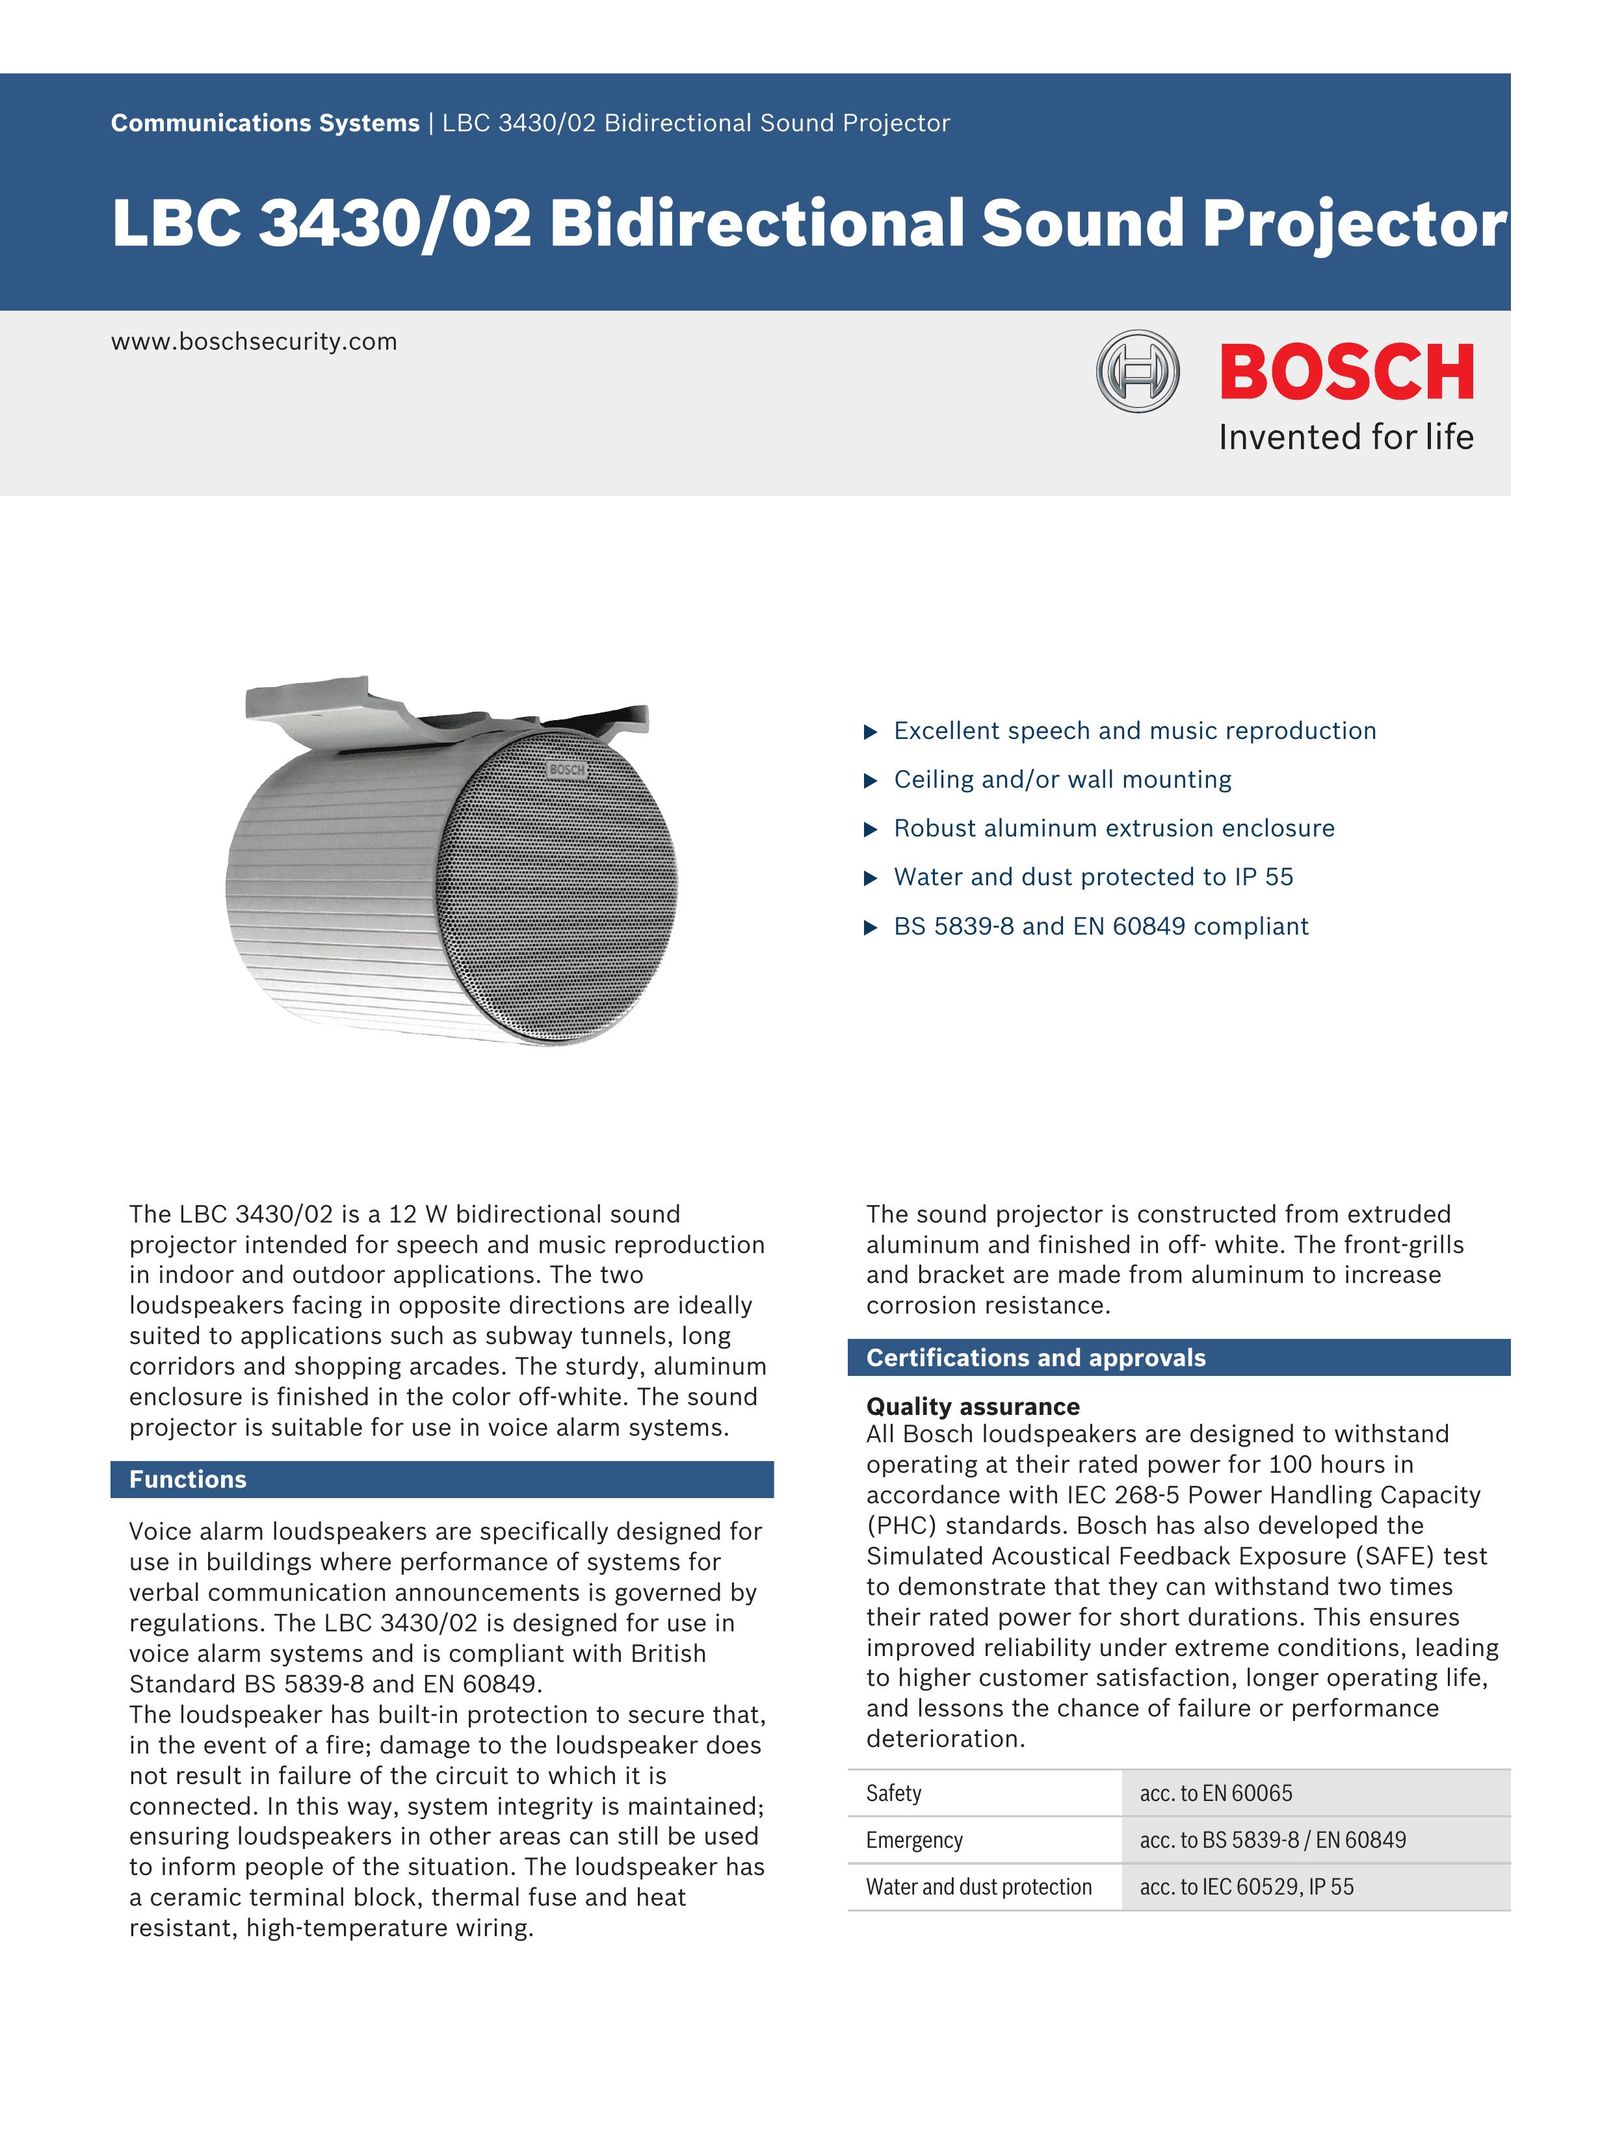 Bosch Appliances LBC 3430 2 Car Speaker User Manual